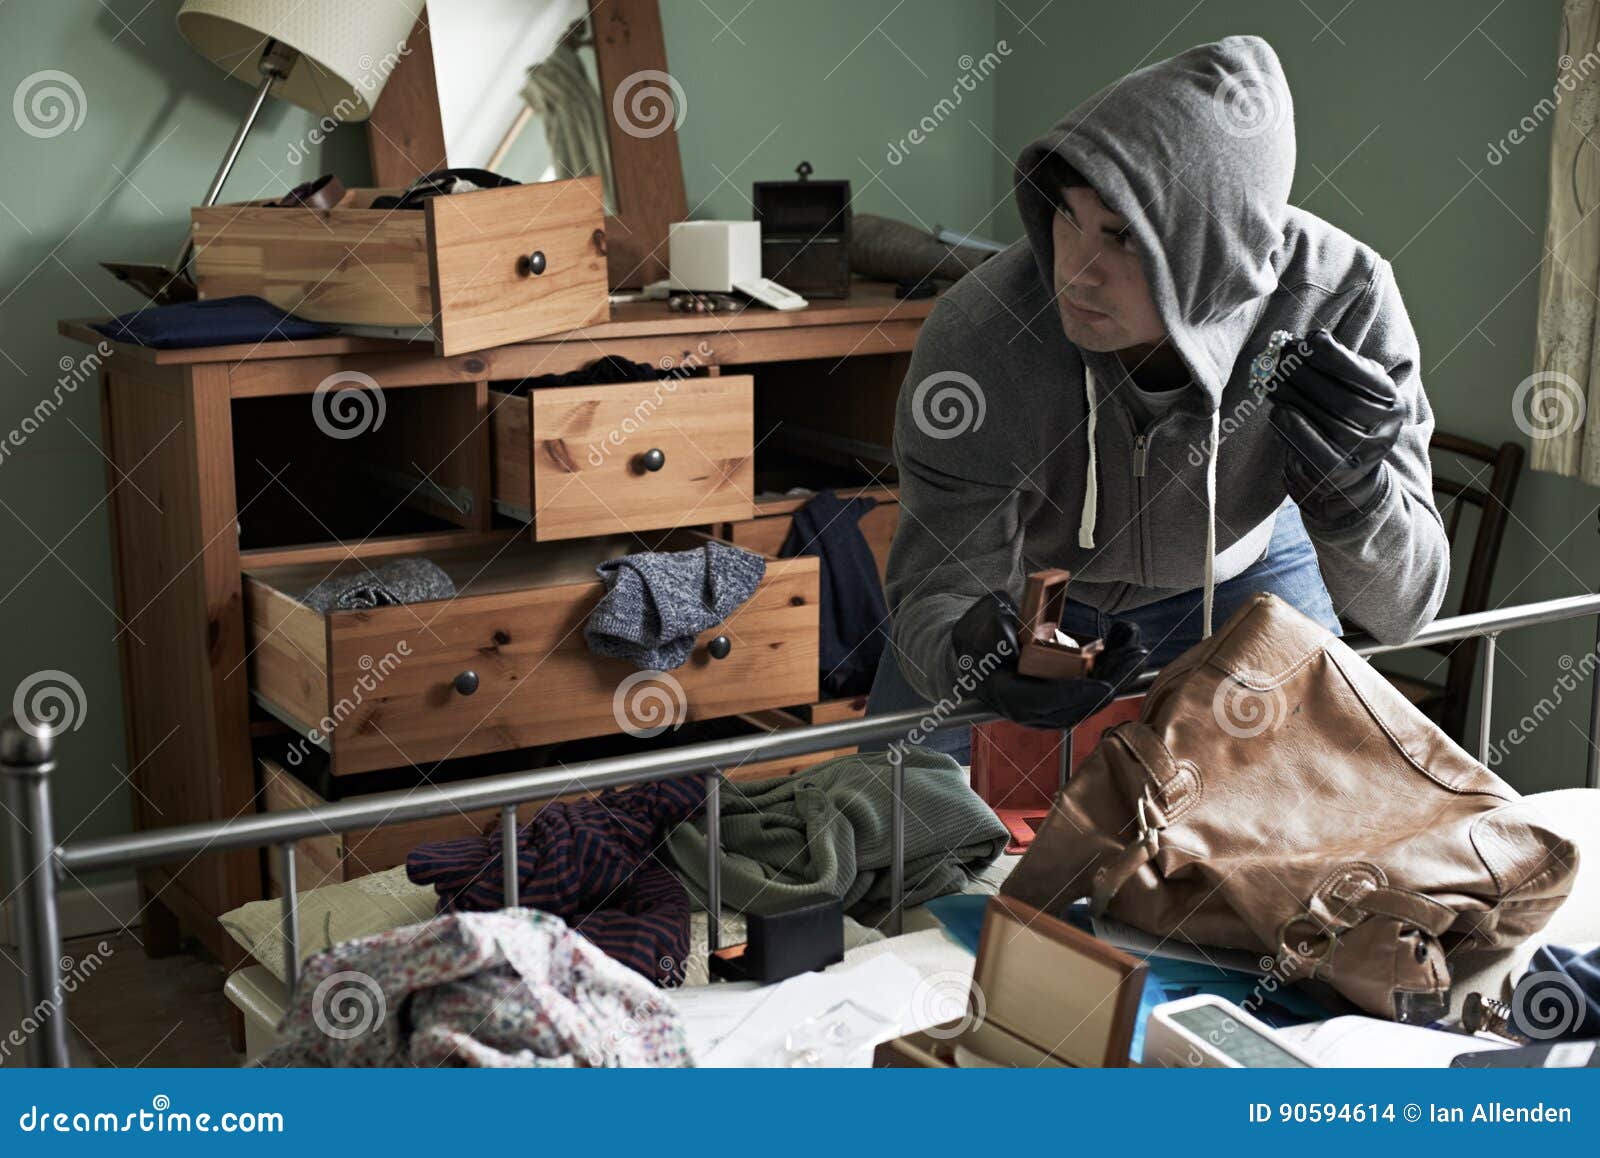 burglar stealing items from bedroom during house break in